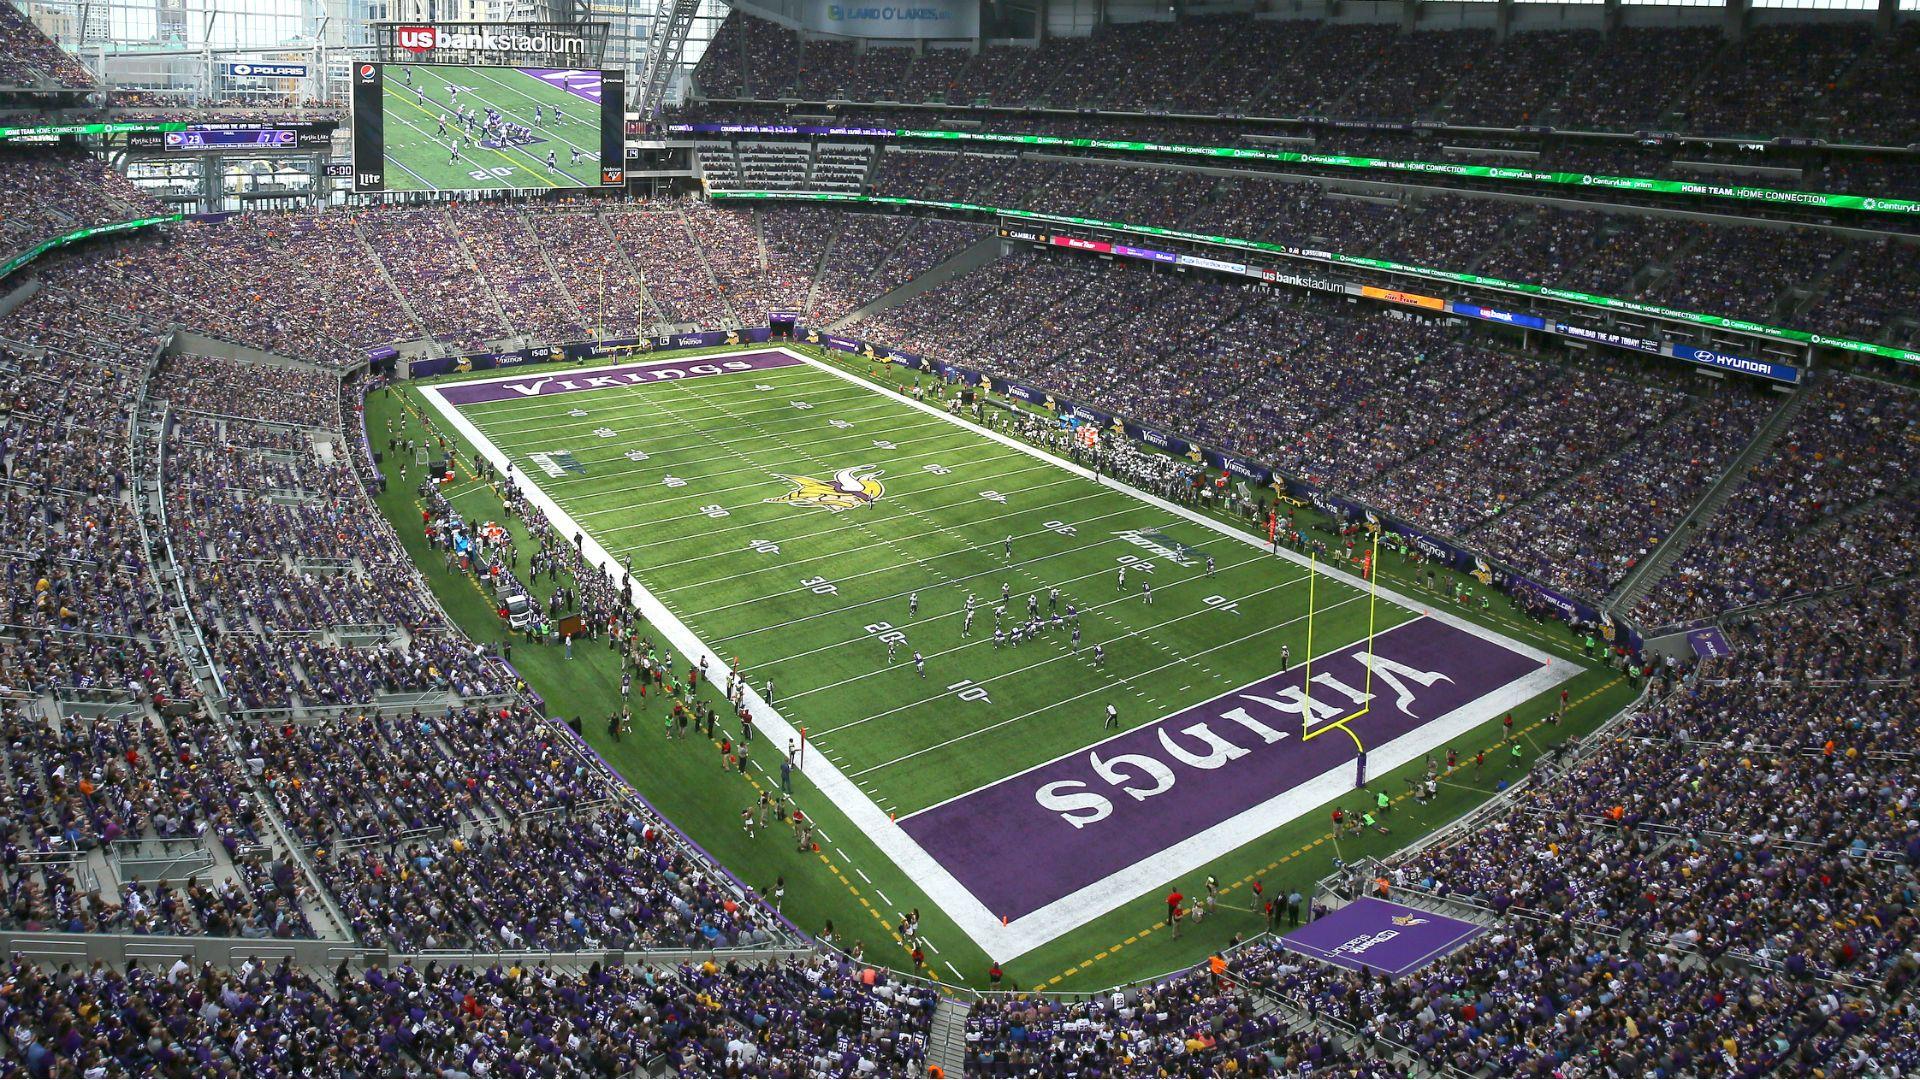 Vikings alert fans to prepare for 'shock' of Super Bowl ticket